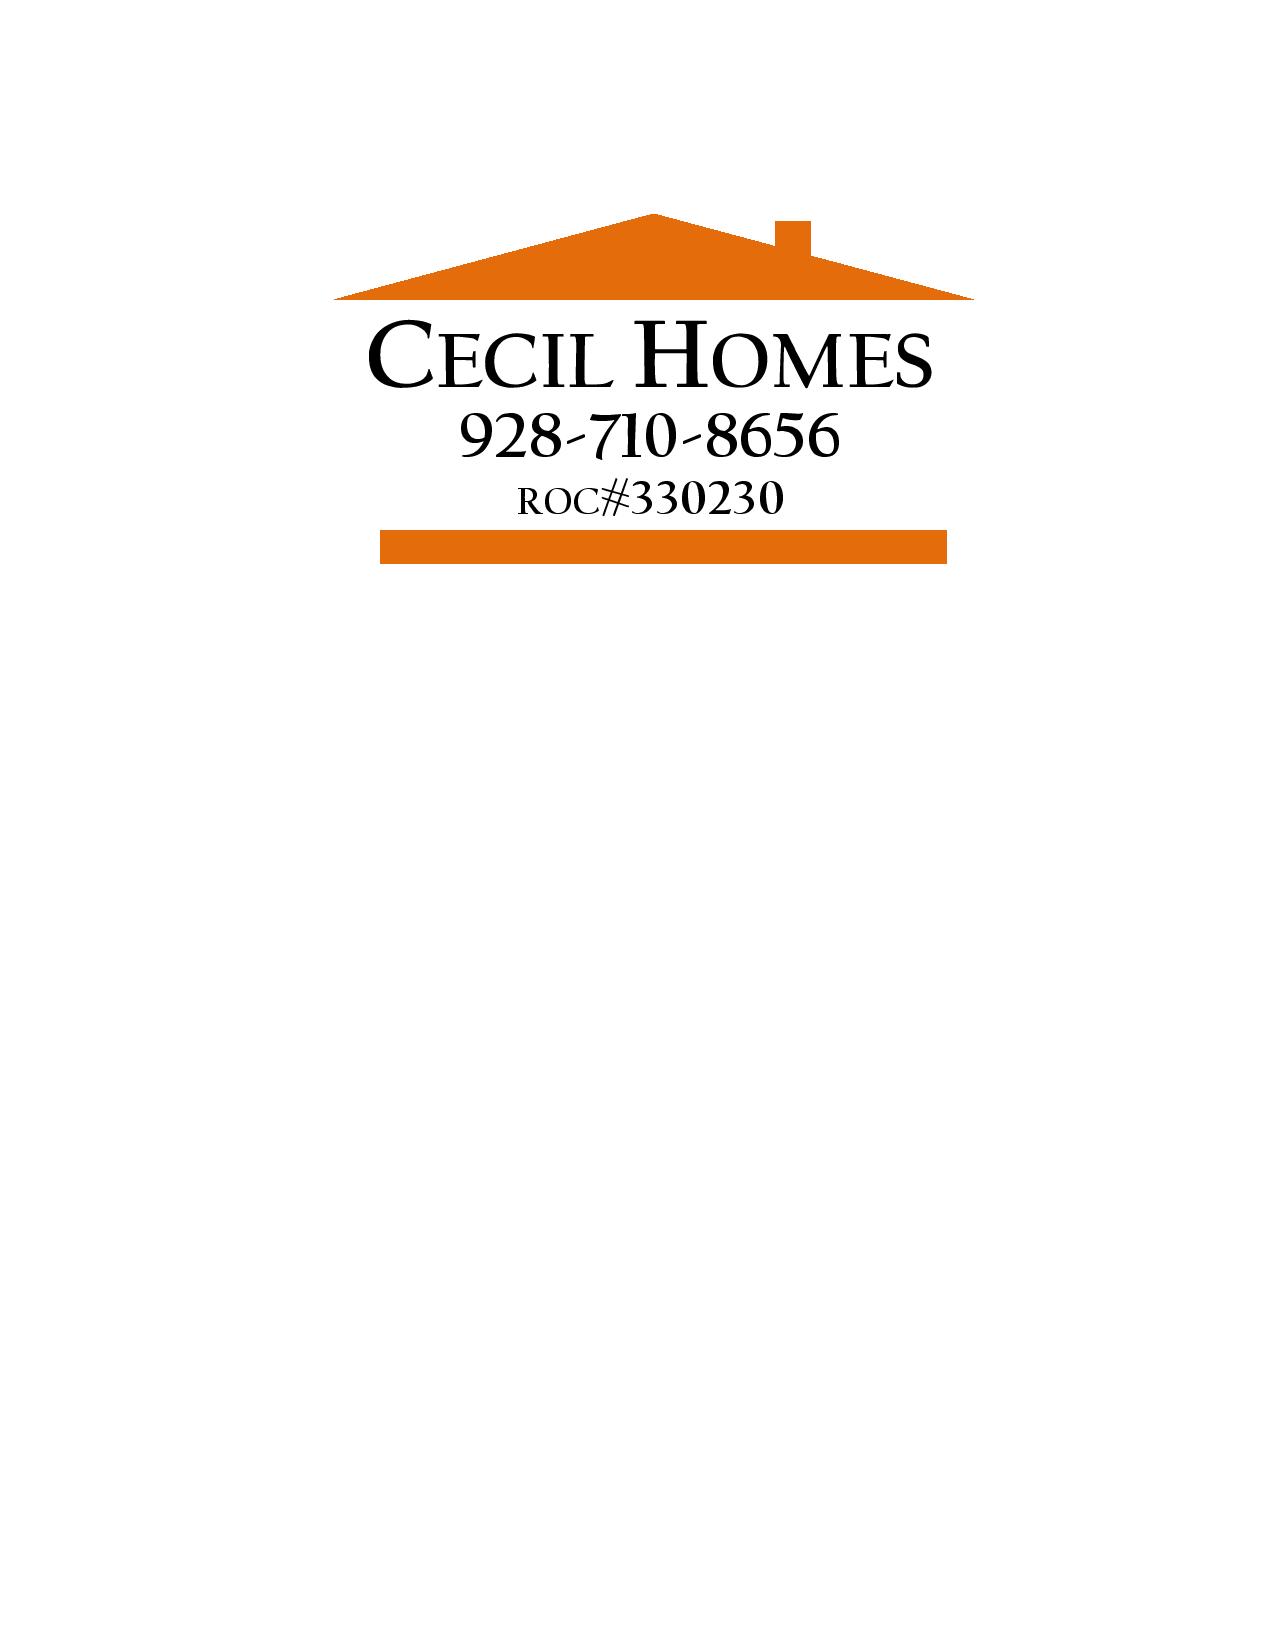 Cecil Homes Logo